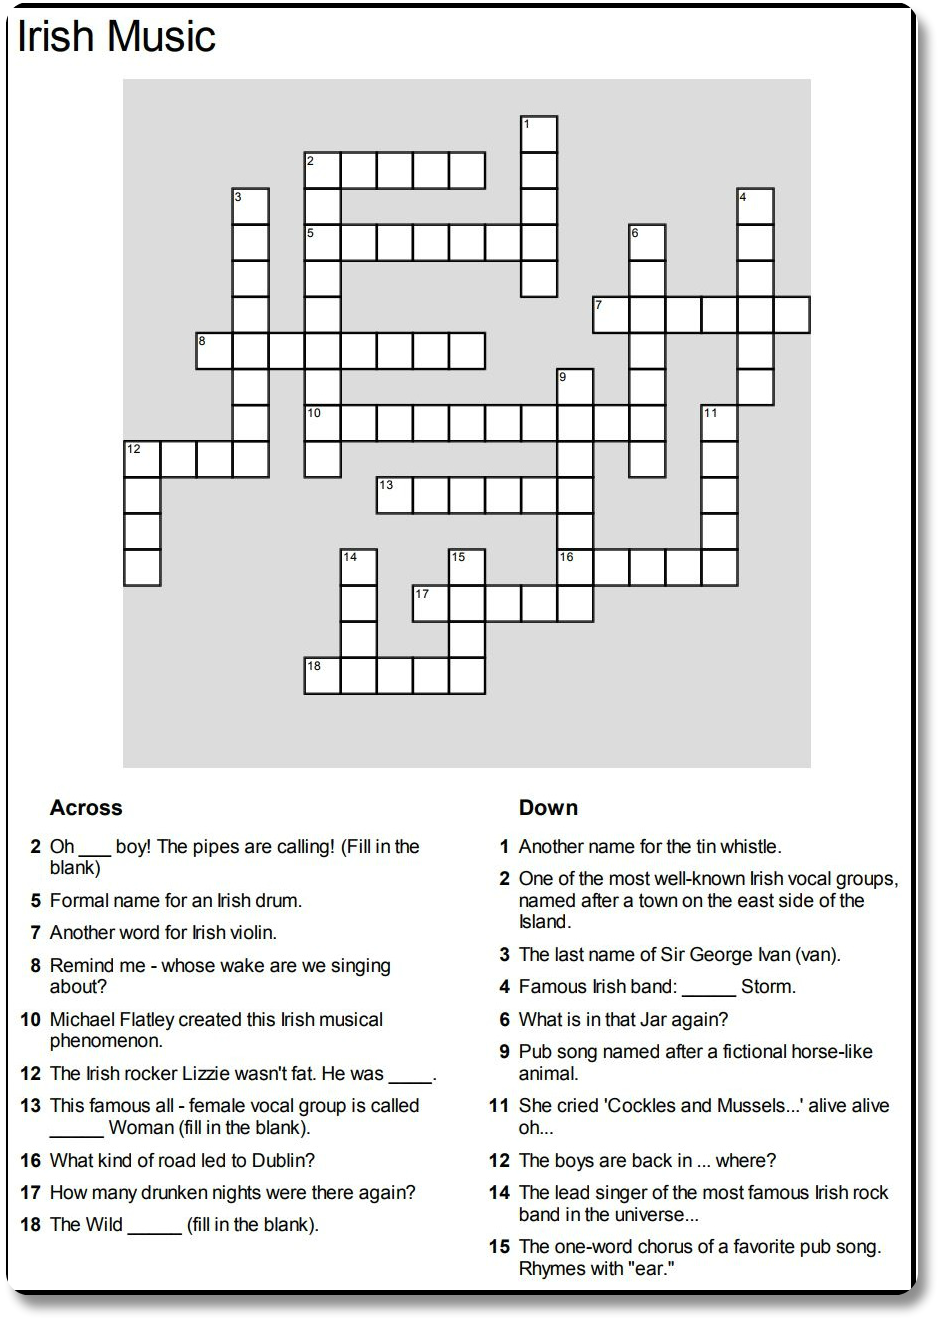 song chorus crossword clue